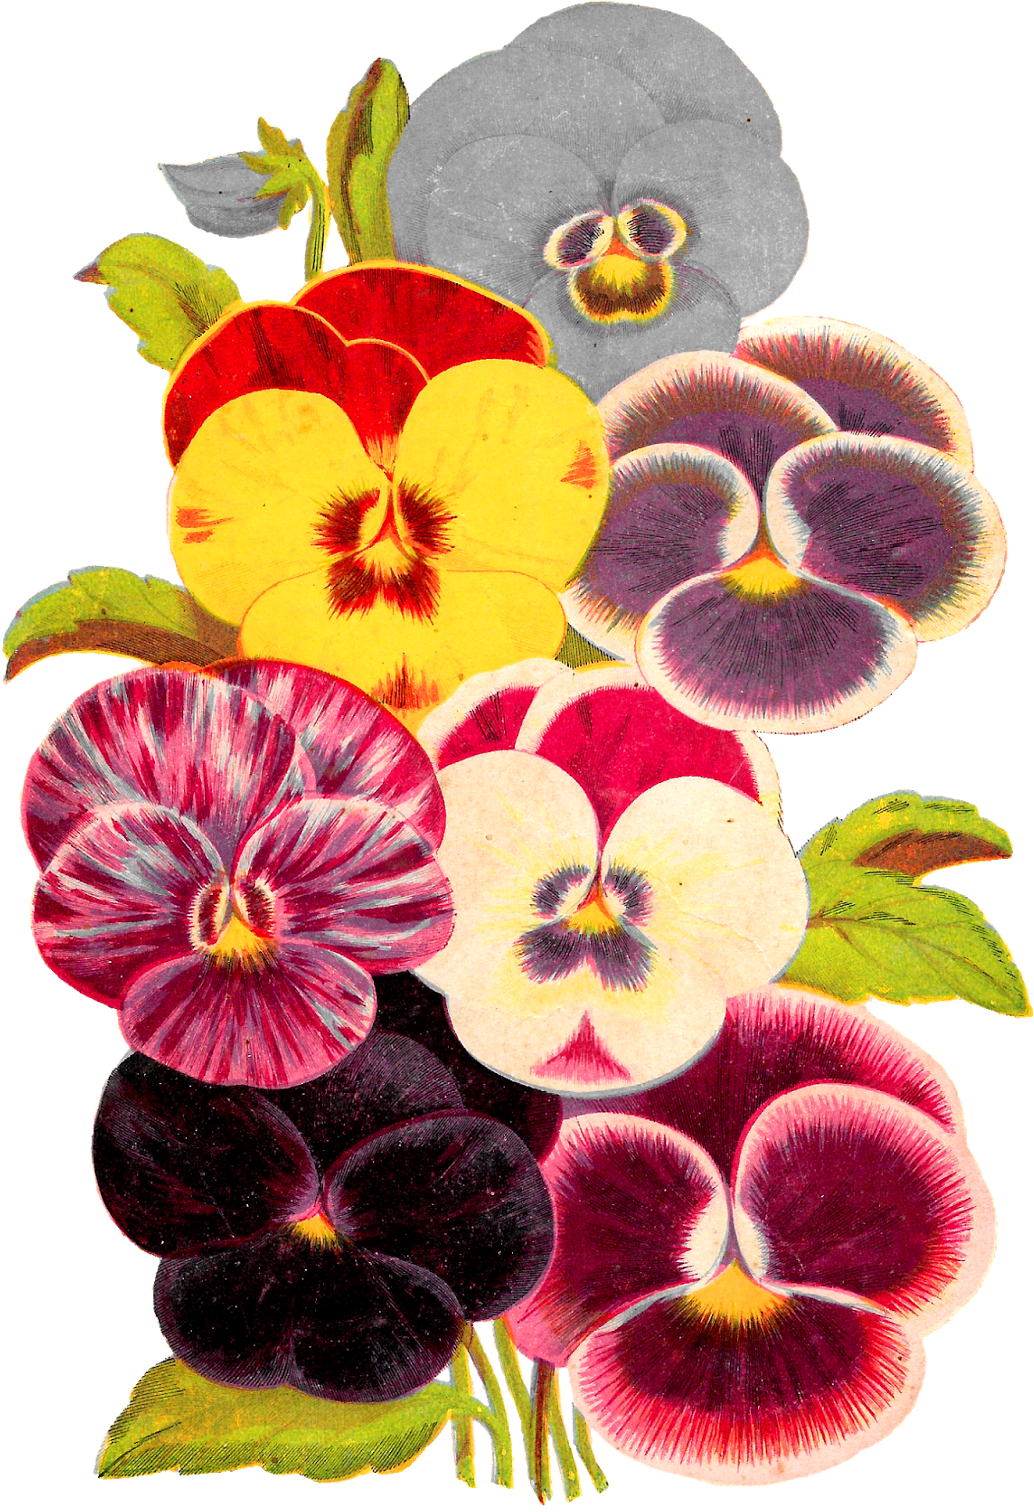 Flower Pansy Botanical Artwork Image Seed Catalog Illustration - Pansy (1121x1600)